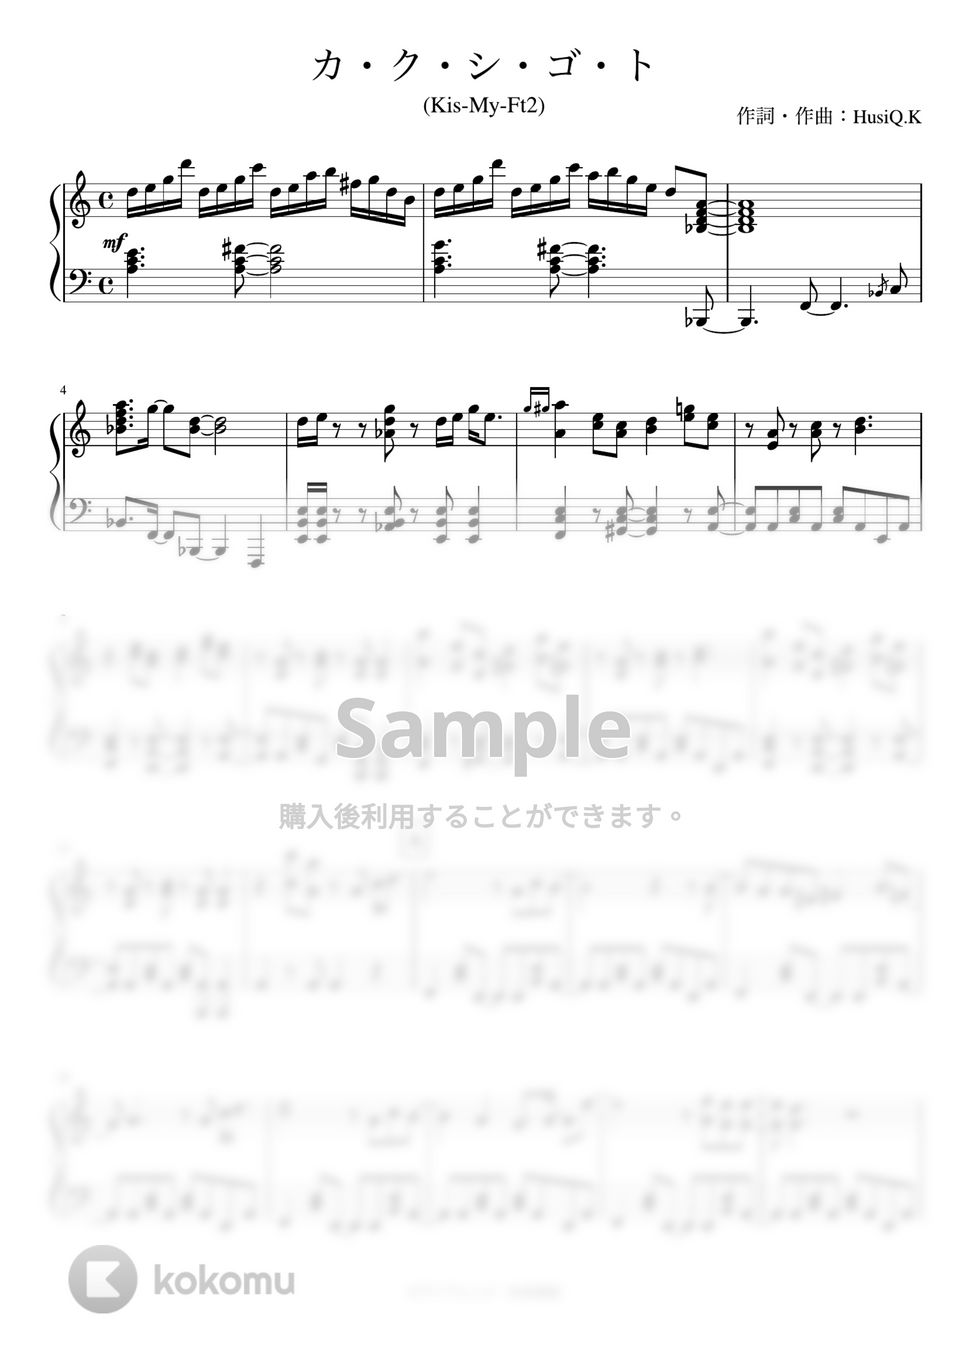 Kis-My-Ft2 - カ・ク・シ・ゴ・ト (ピアノソロ) by あきのピアノ演奏